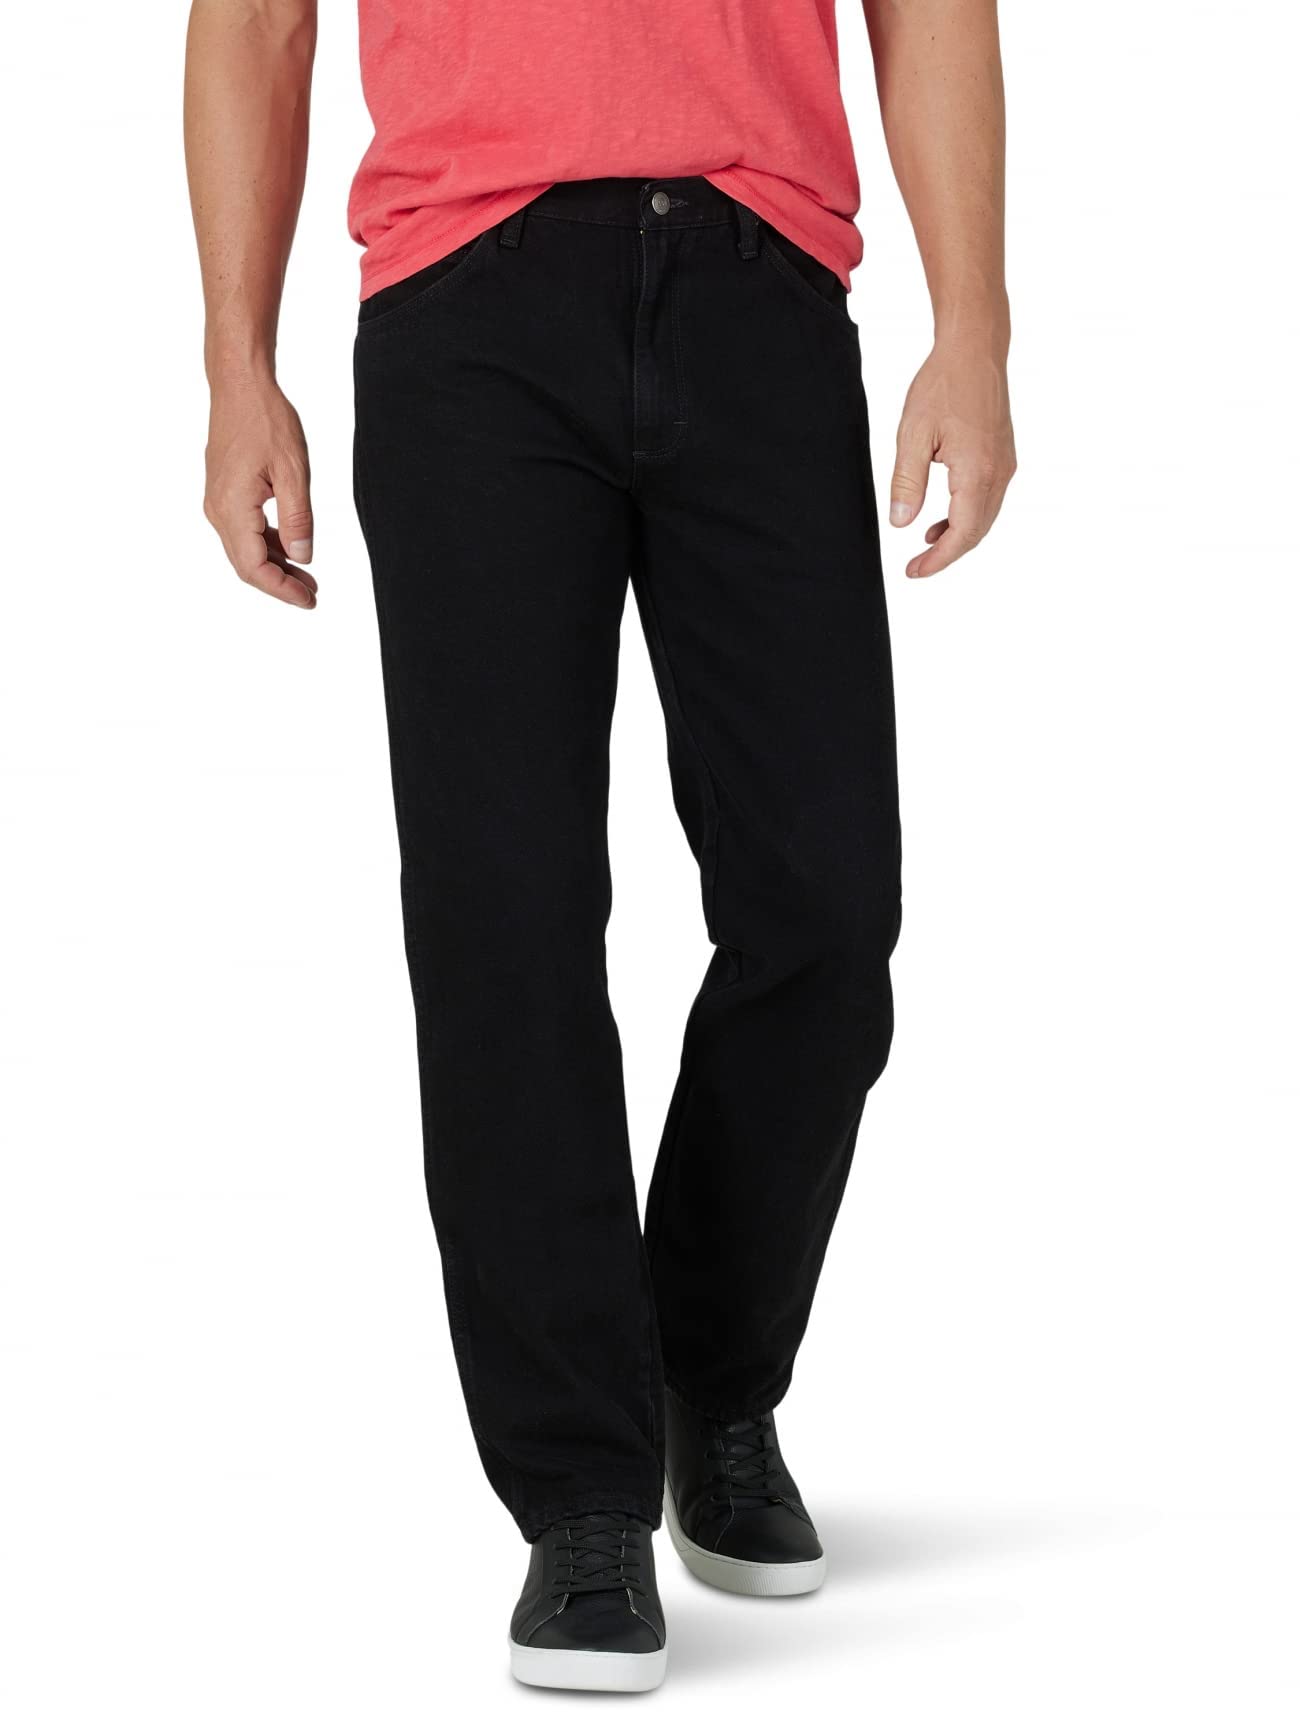 Wrangler Authentics Men's Big & Tall Classic 5-Pocket Regular Fit Cotton Jean, Black, 44W x 32L